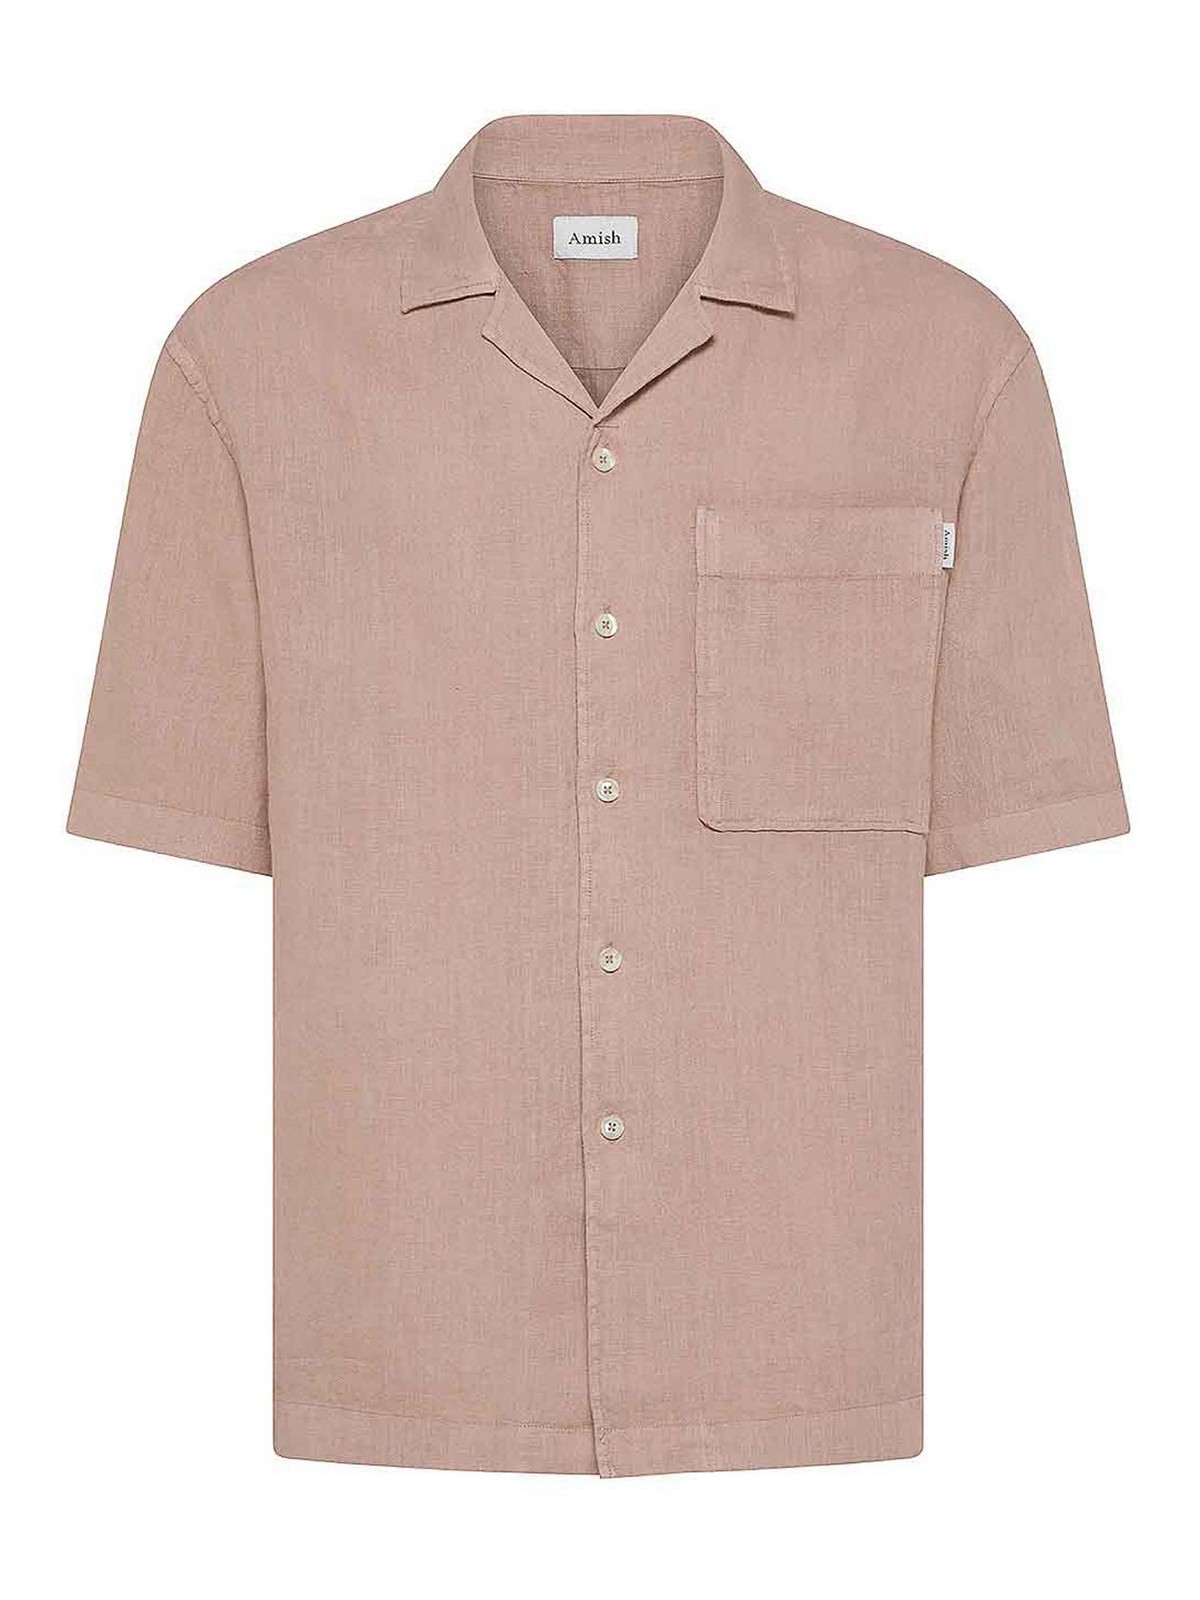 Shop Amish Camisa - Color Carne Y Neutral